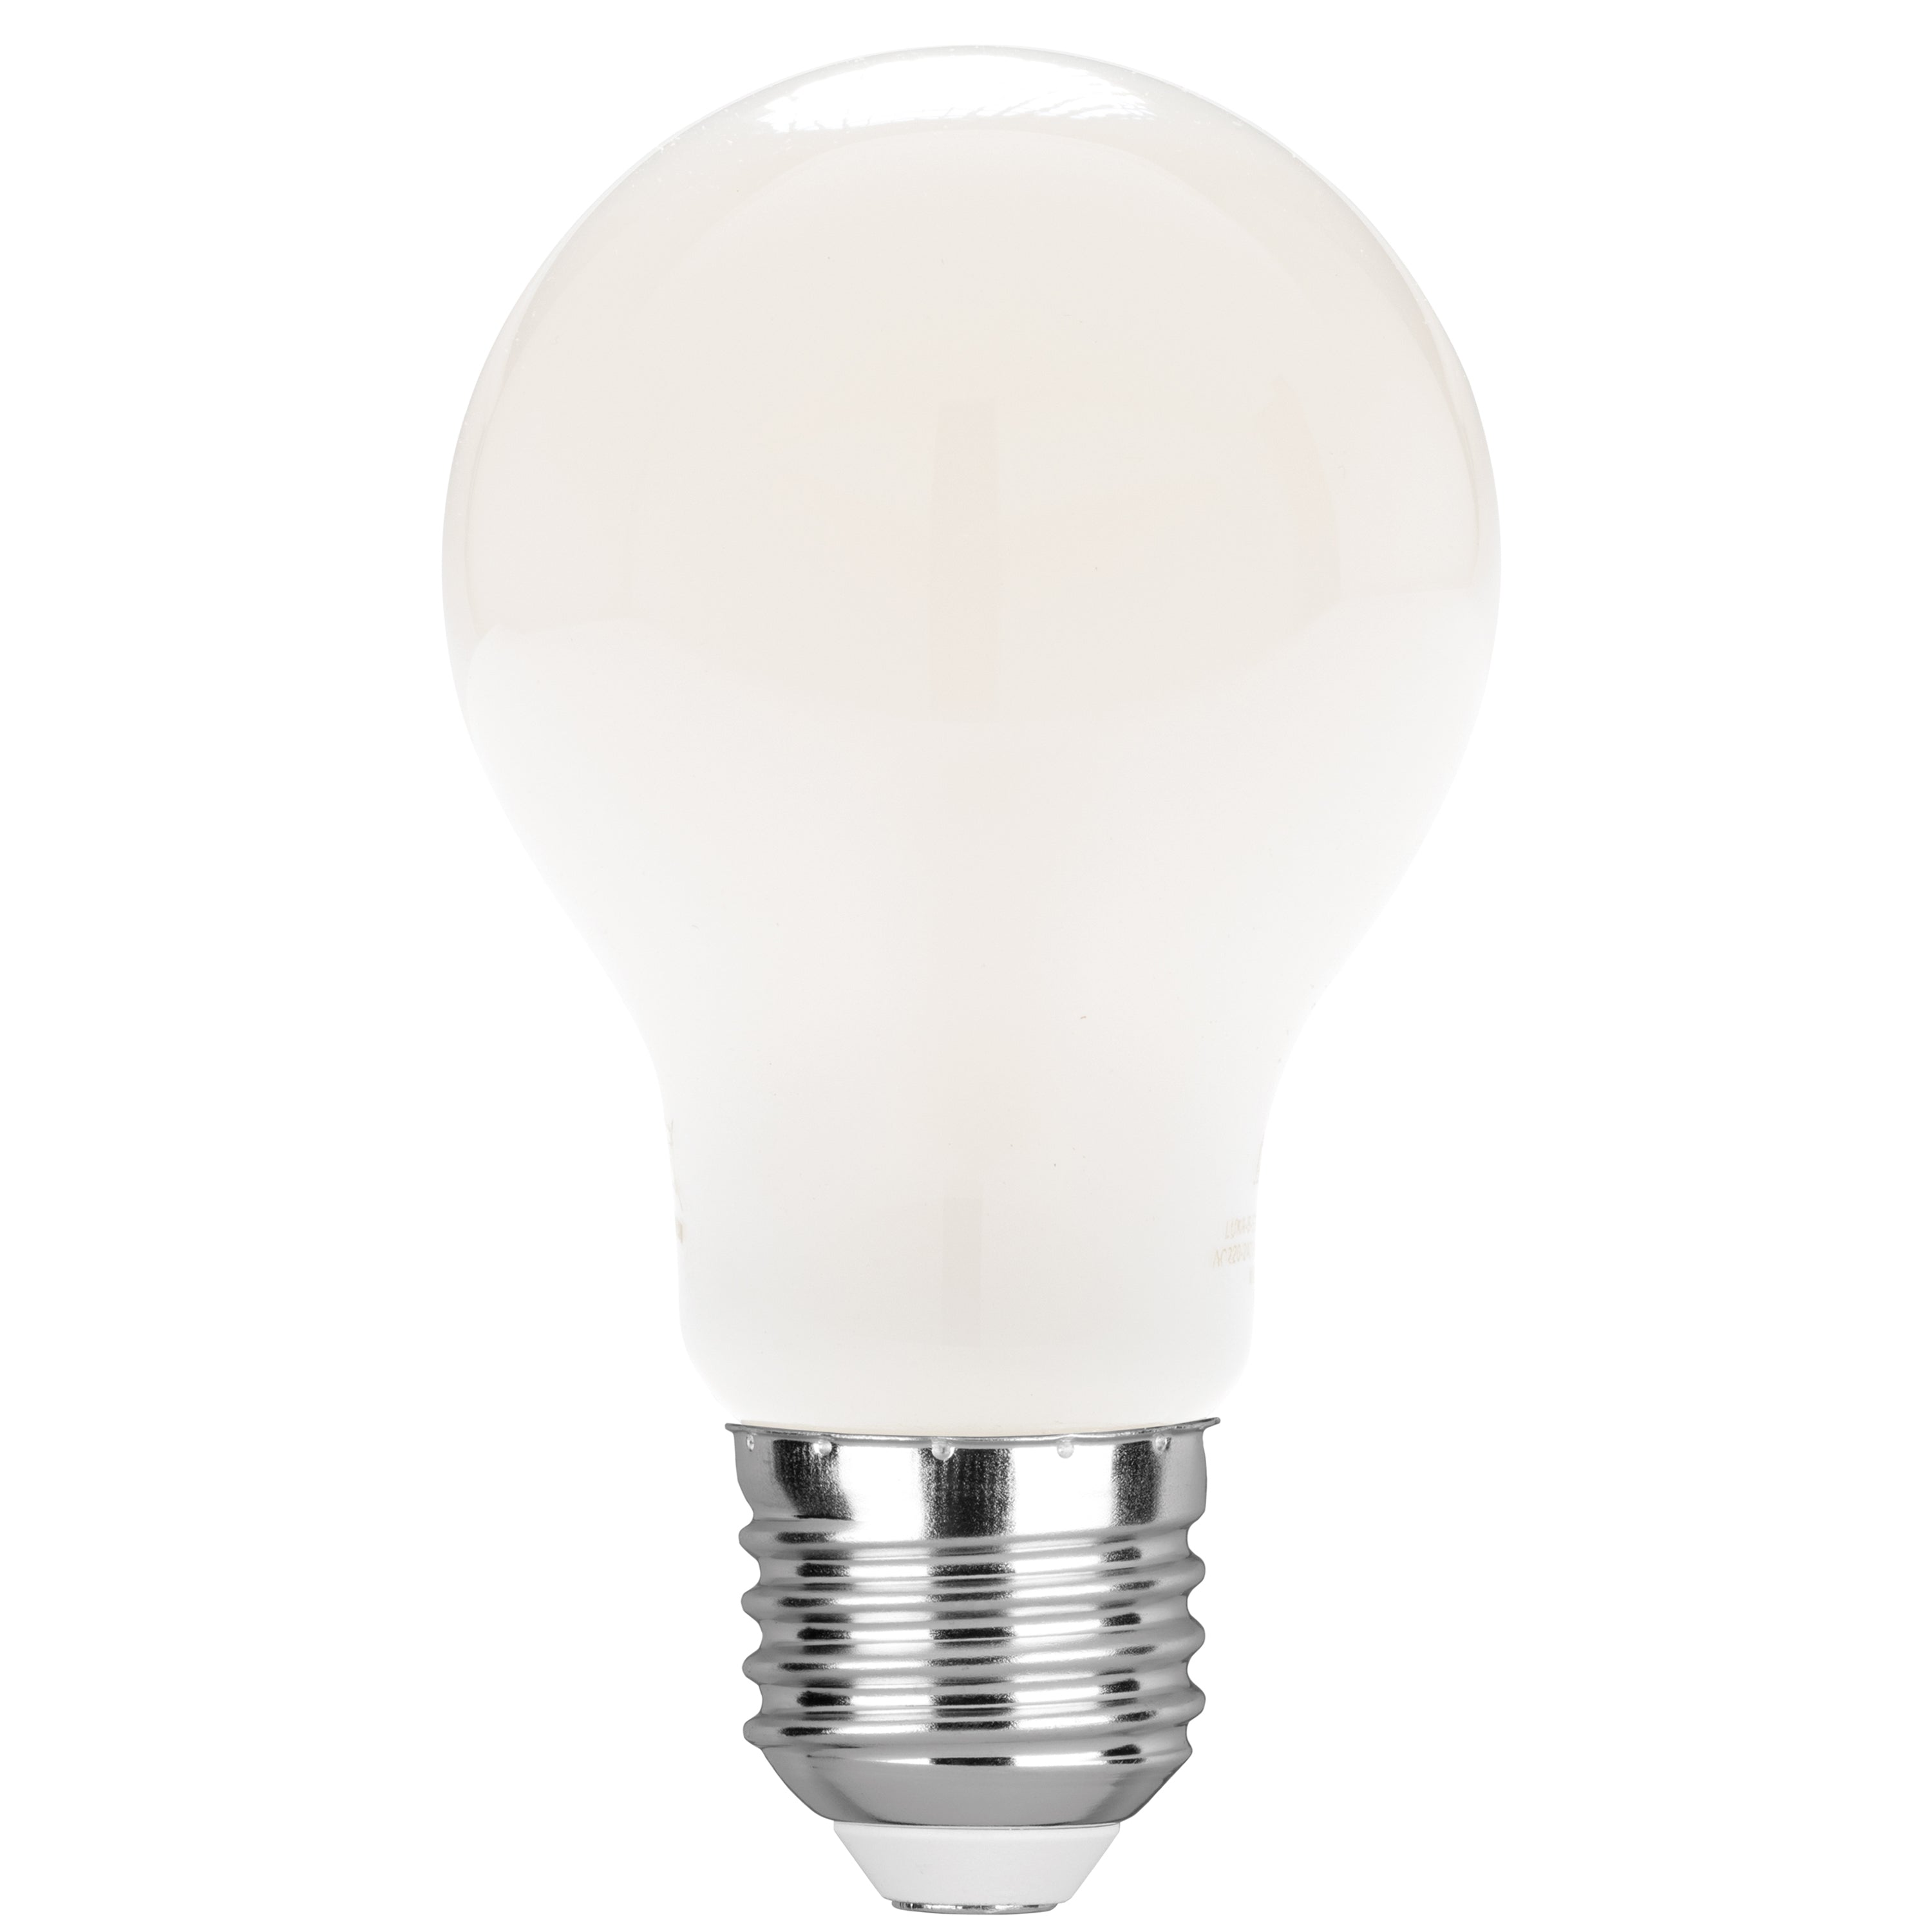 KIT de 3 bombillas LED LUXA de filamento blanco E27 8W 950L 60mm 